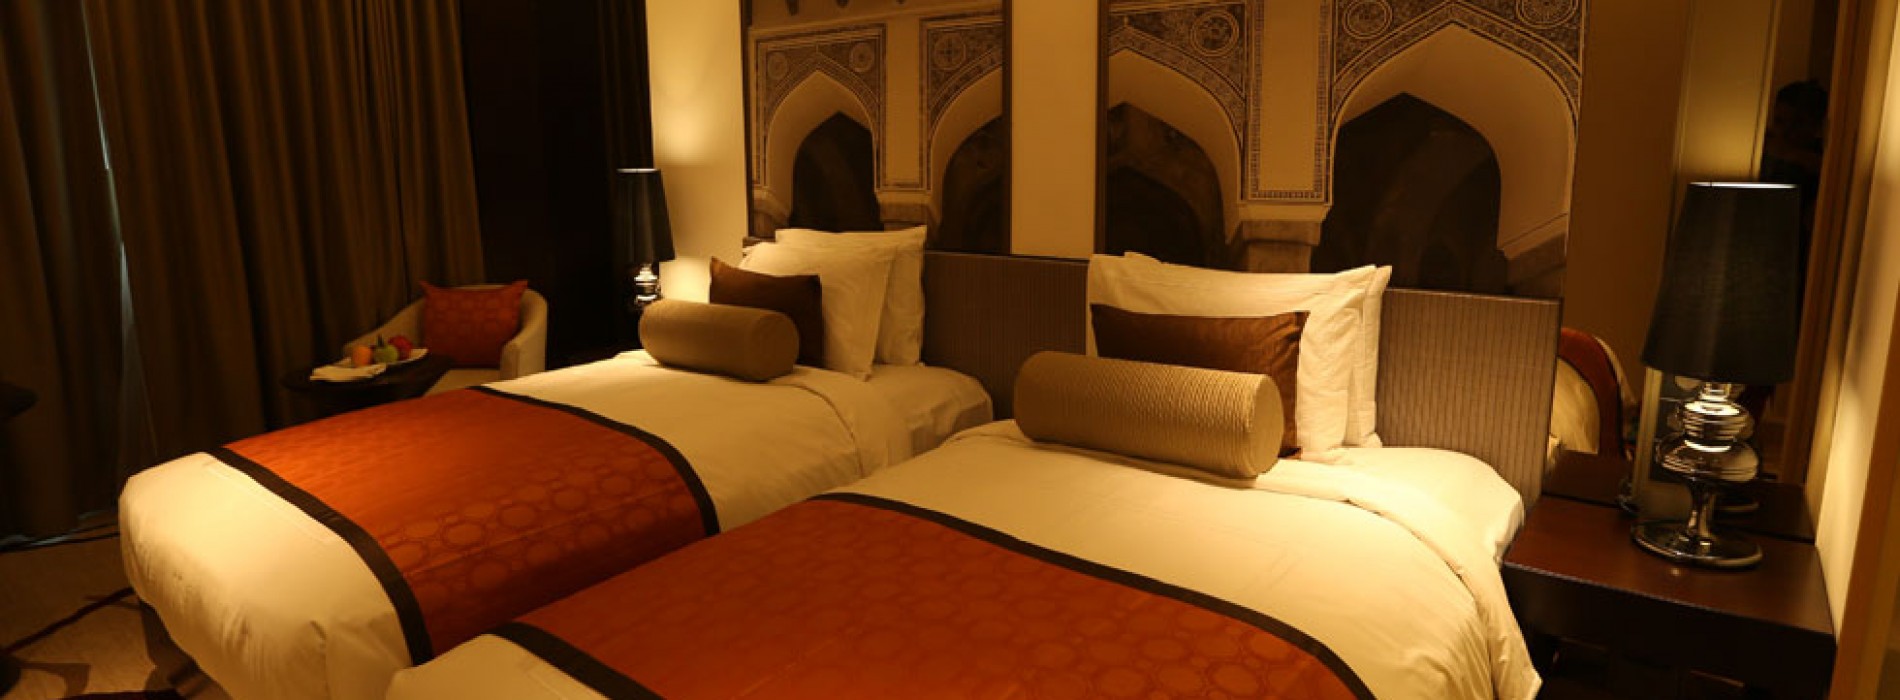 Pride Hotels launch its luxury hotel at Aerocity, New Delhi